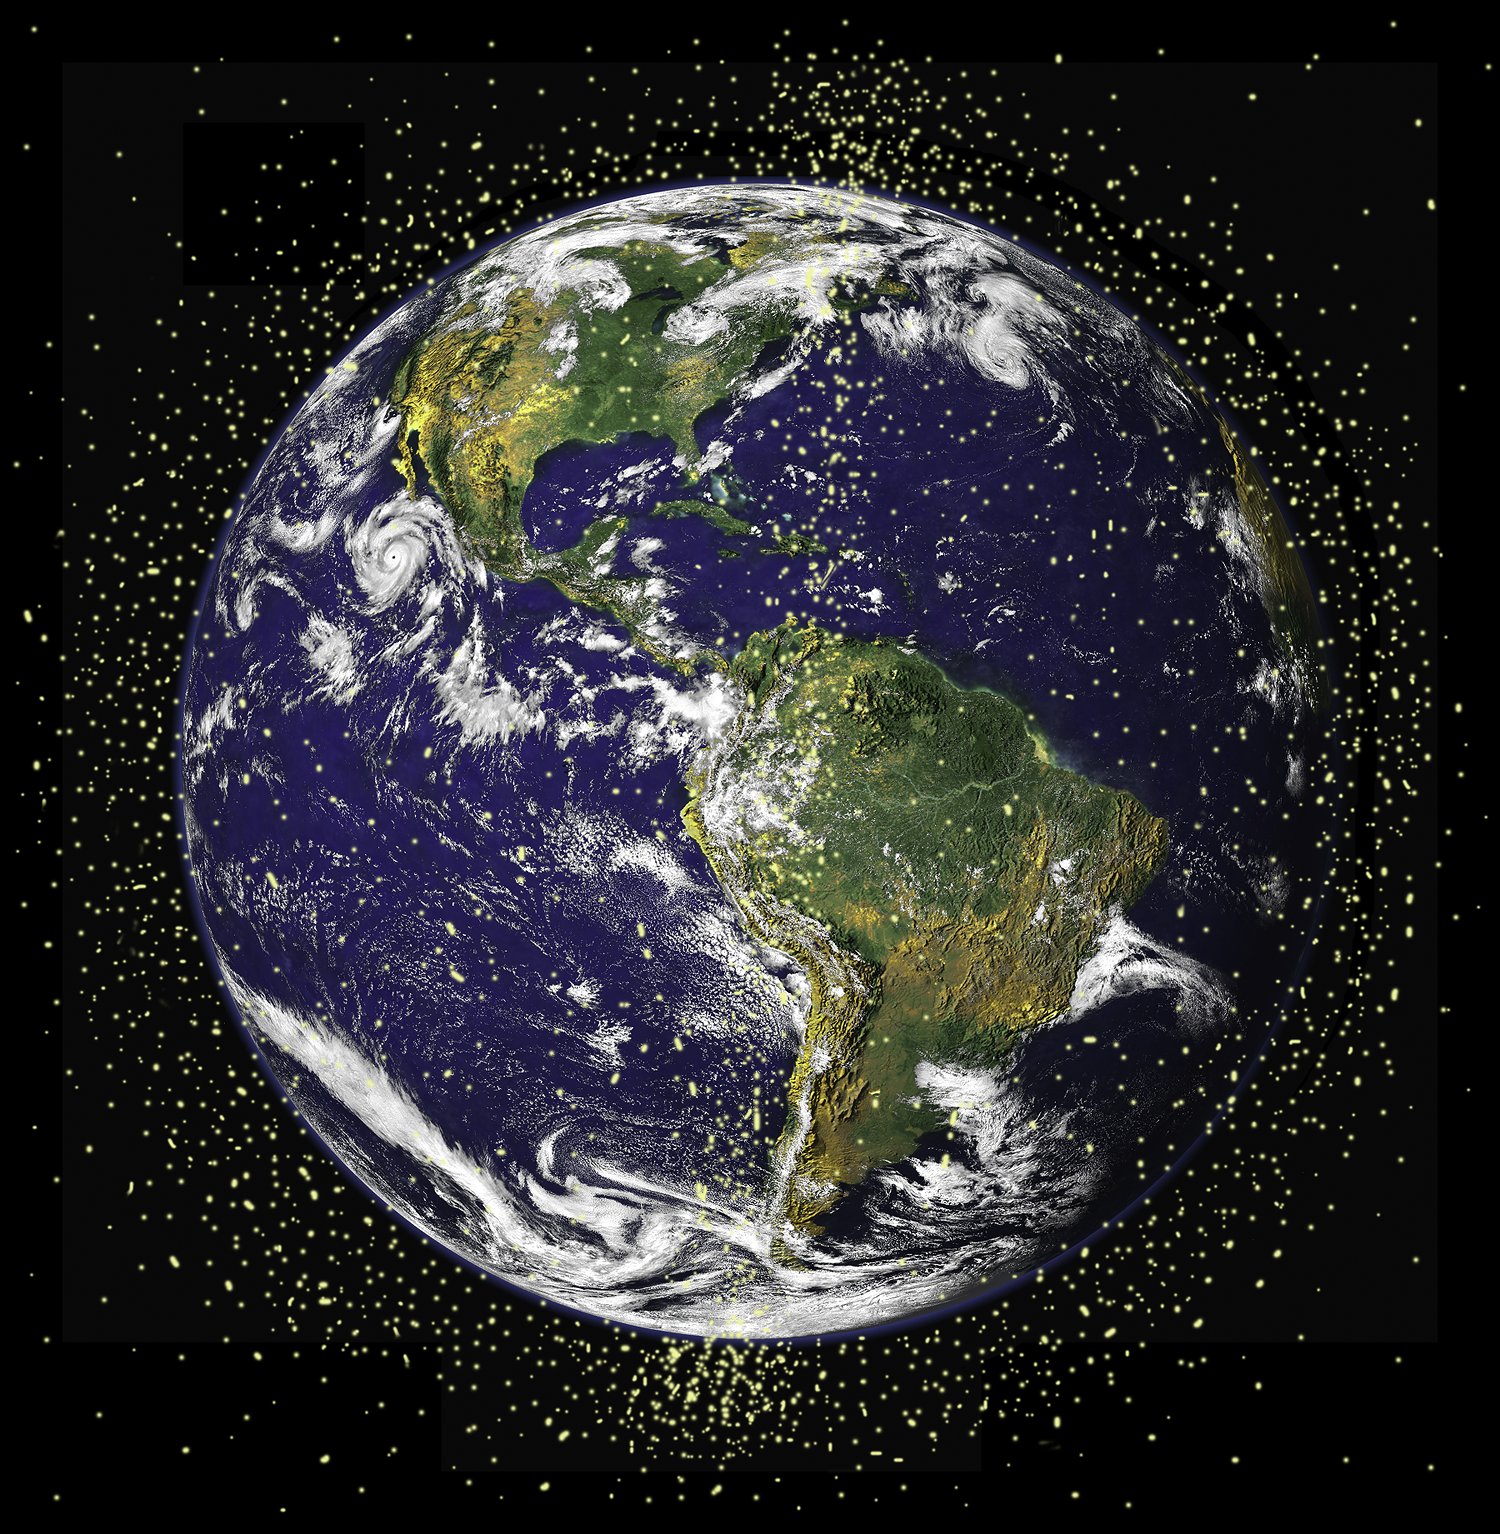 Micrometeoroide and orbital debris around the earth 